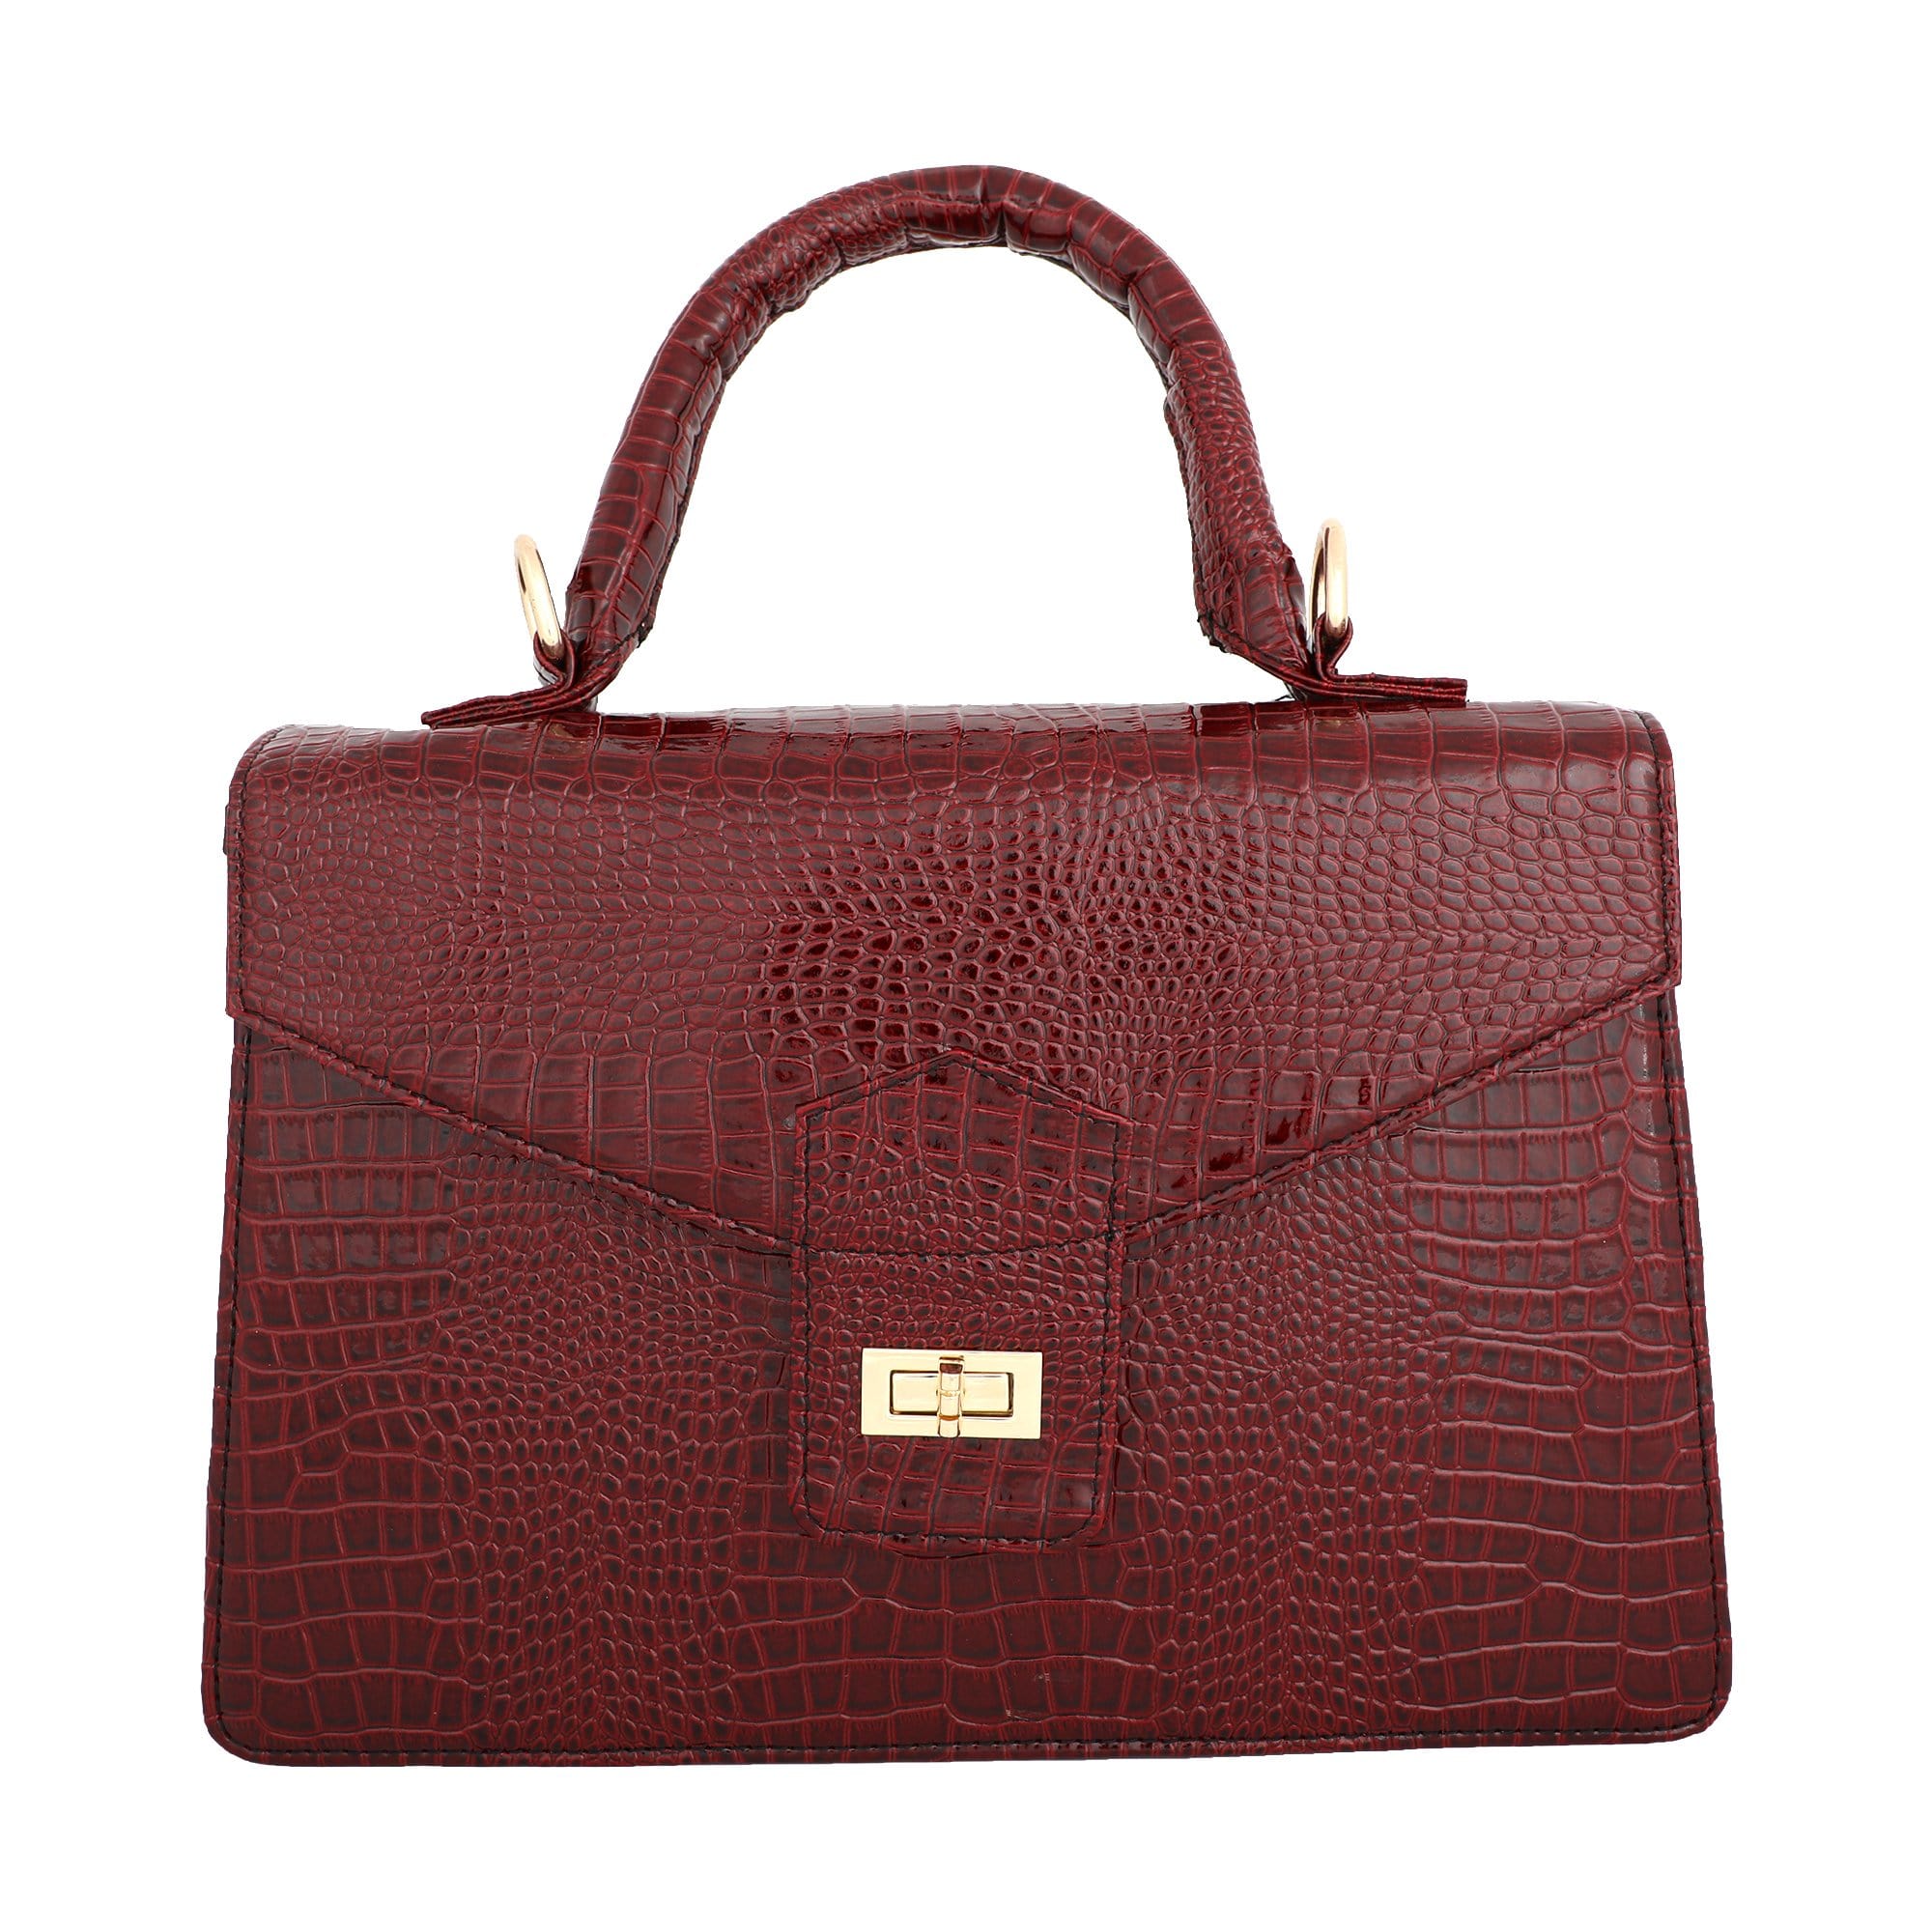 kinnoti Handbags Red Wine Vegan Croco Leather Satchel Handbag